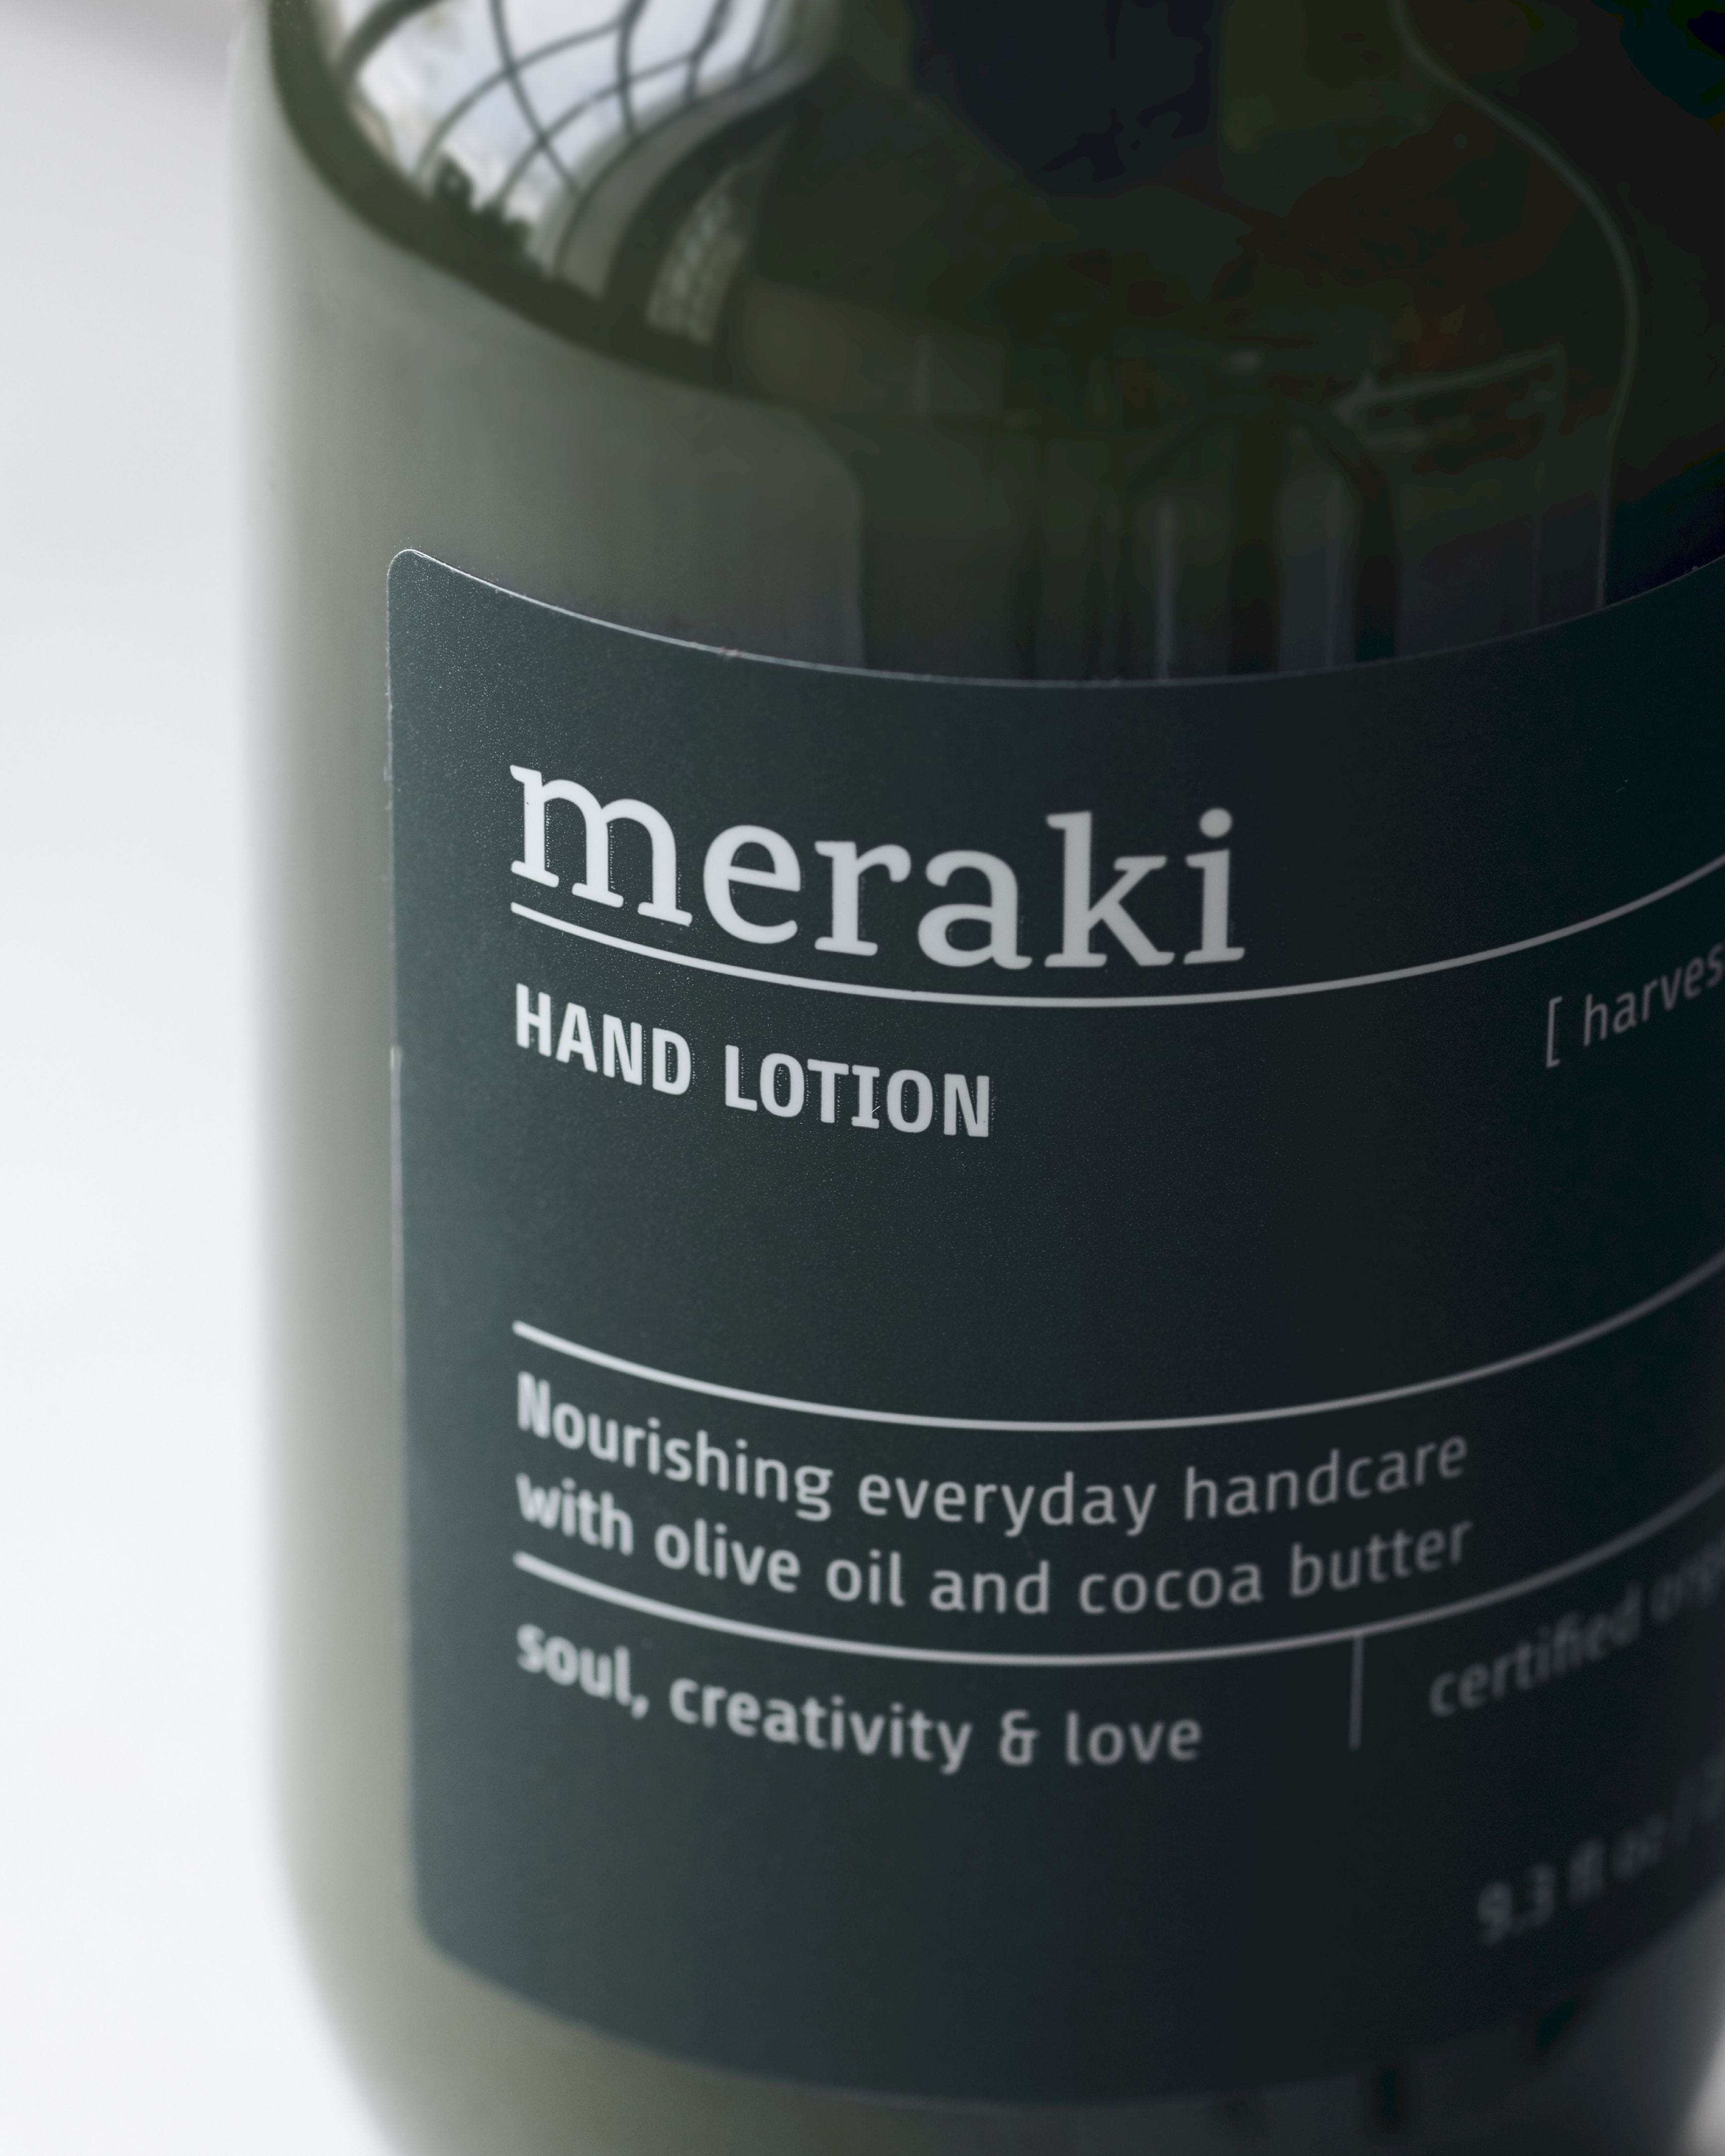 Meraki Lotion à main 275 ml, Moon Harvest